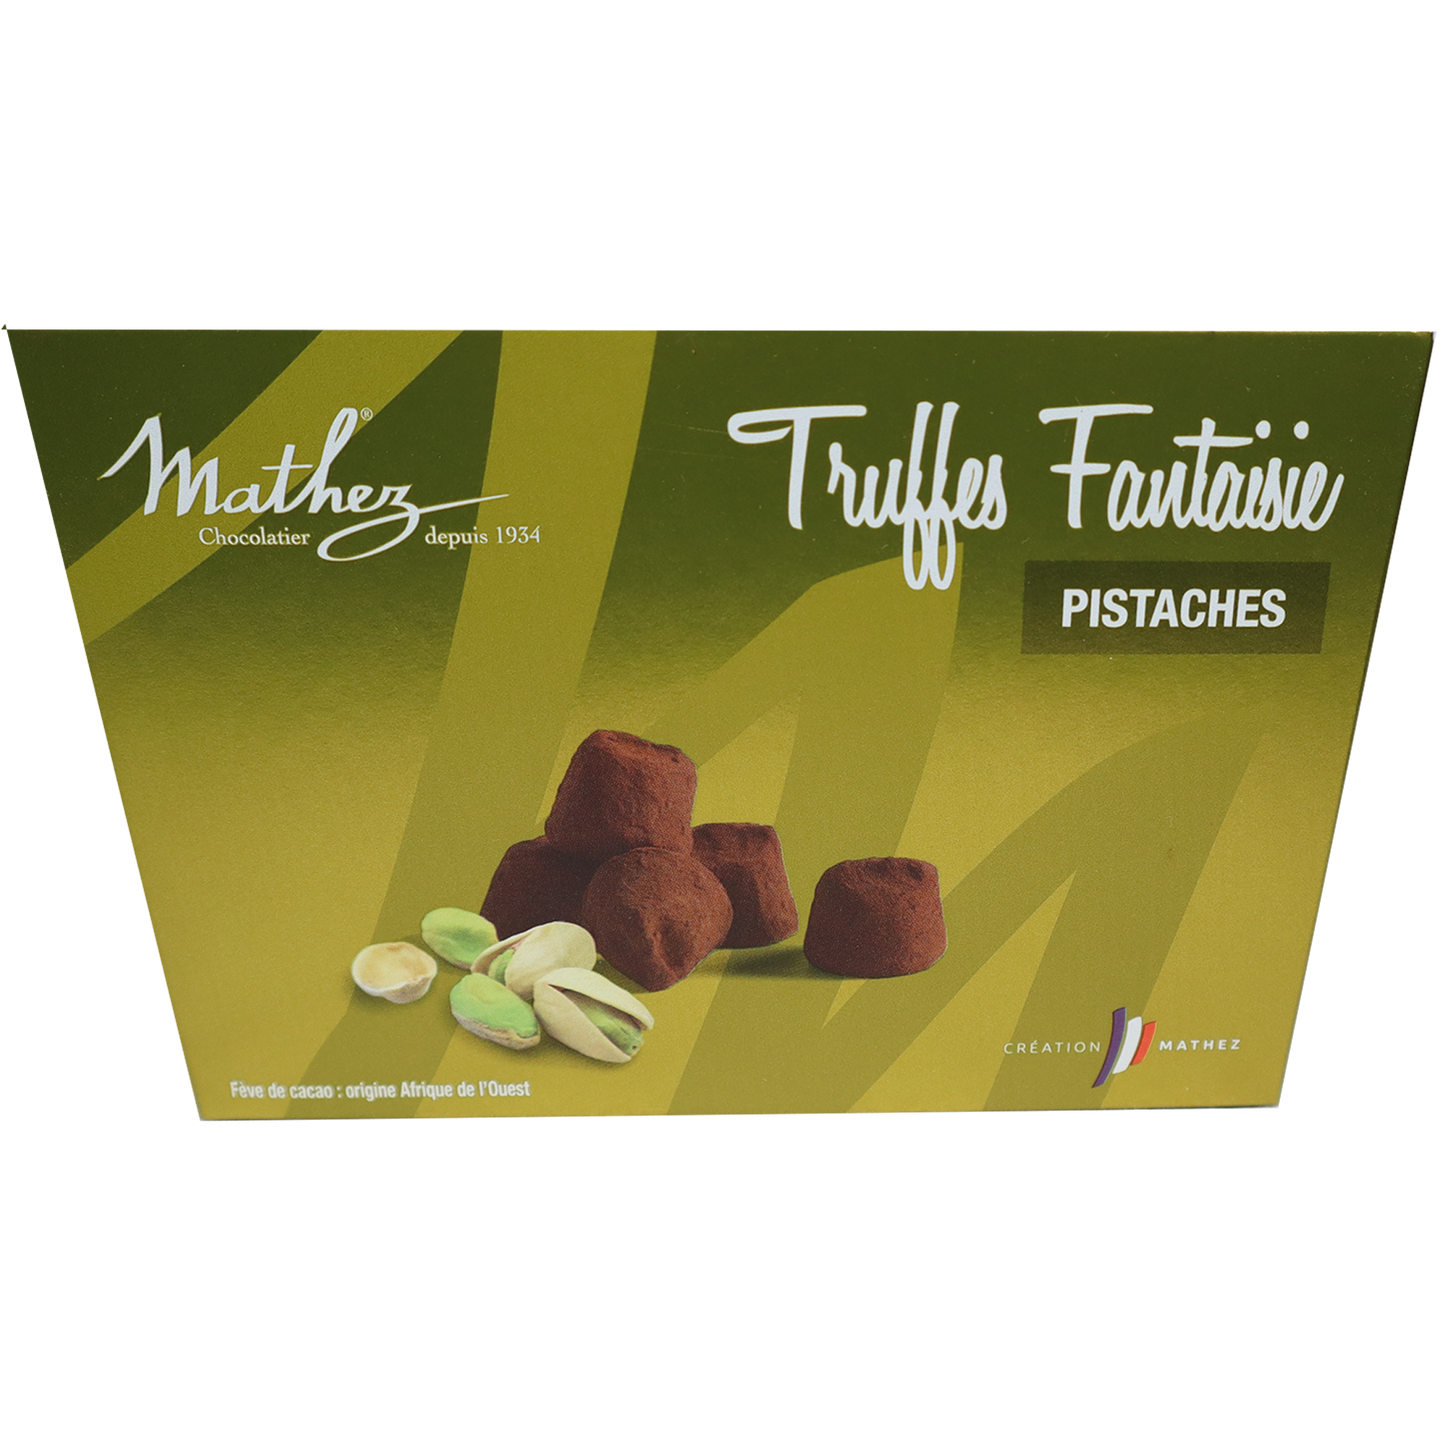 Mathez Pistachio Cocoa-Powdered Truffles, 250 g